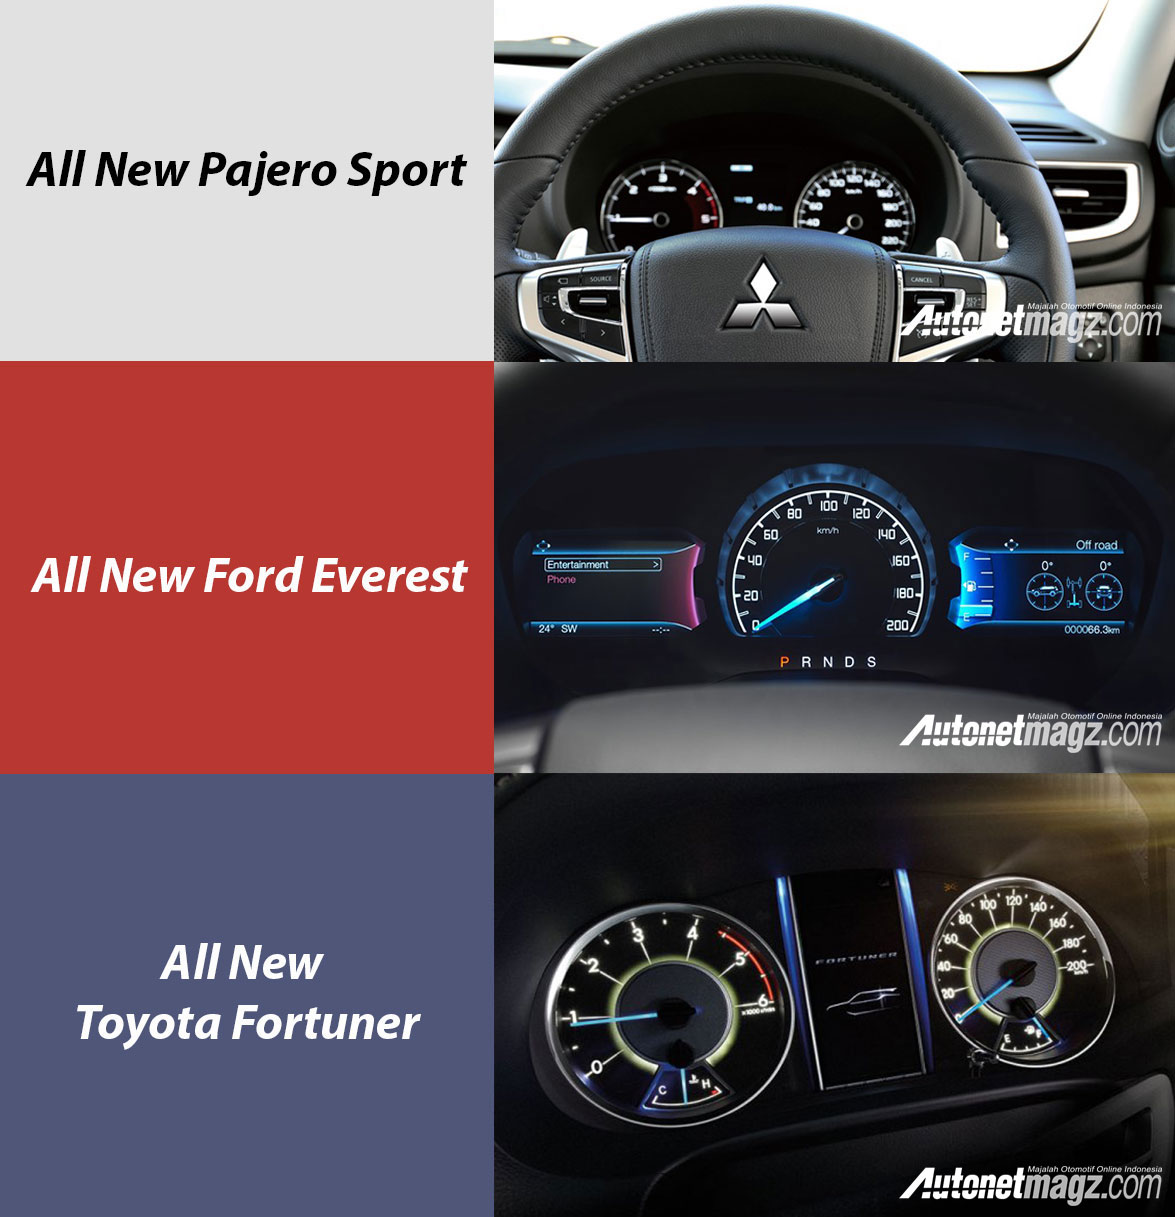 Berita, komparasi-speedometer-pajero-sport-everest-fortuner: Komparasi Pajero Sport vs Ford Everest vs Toyota Fortuner Terbaru